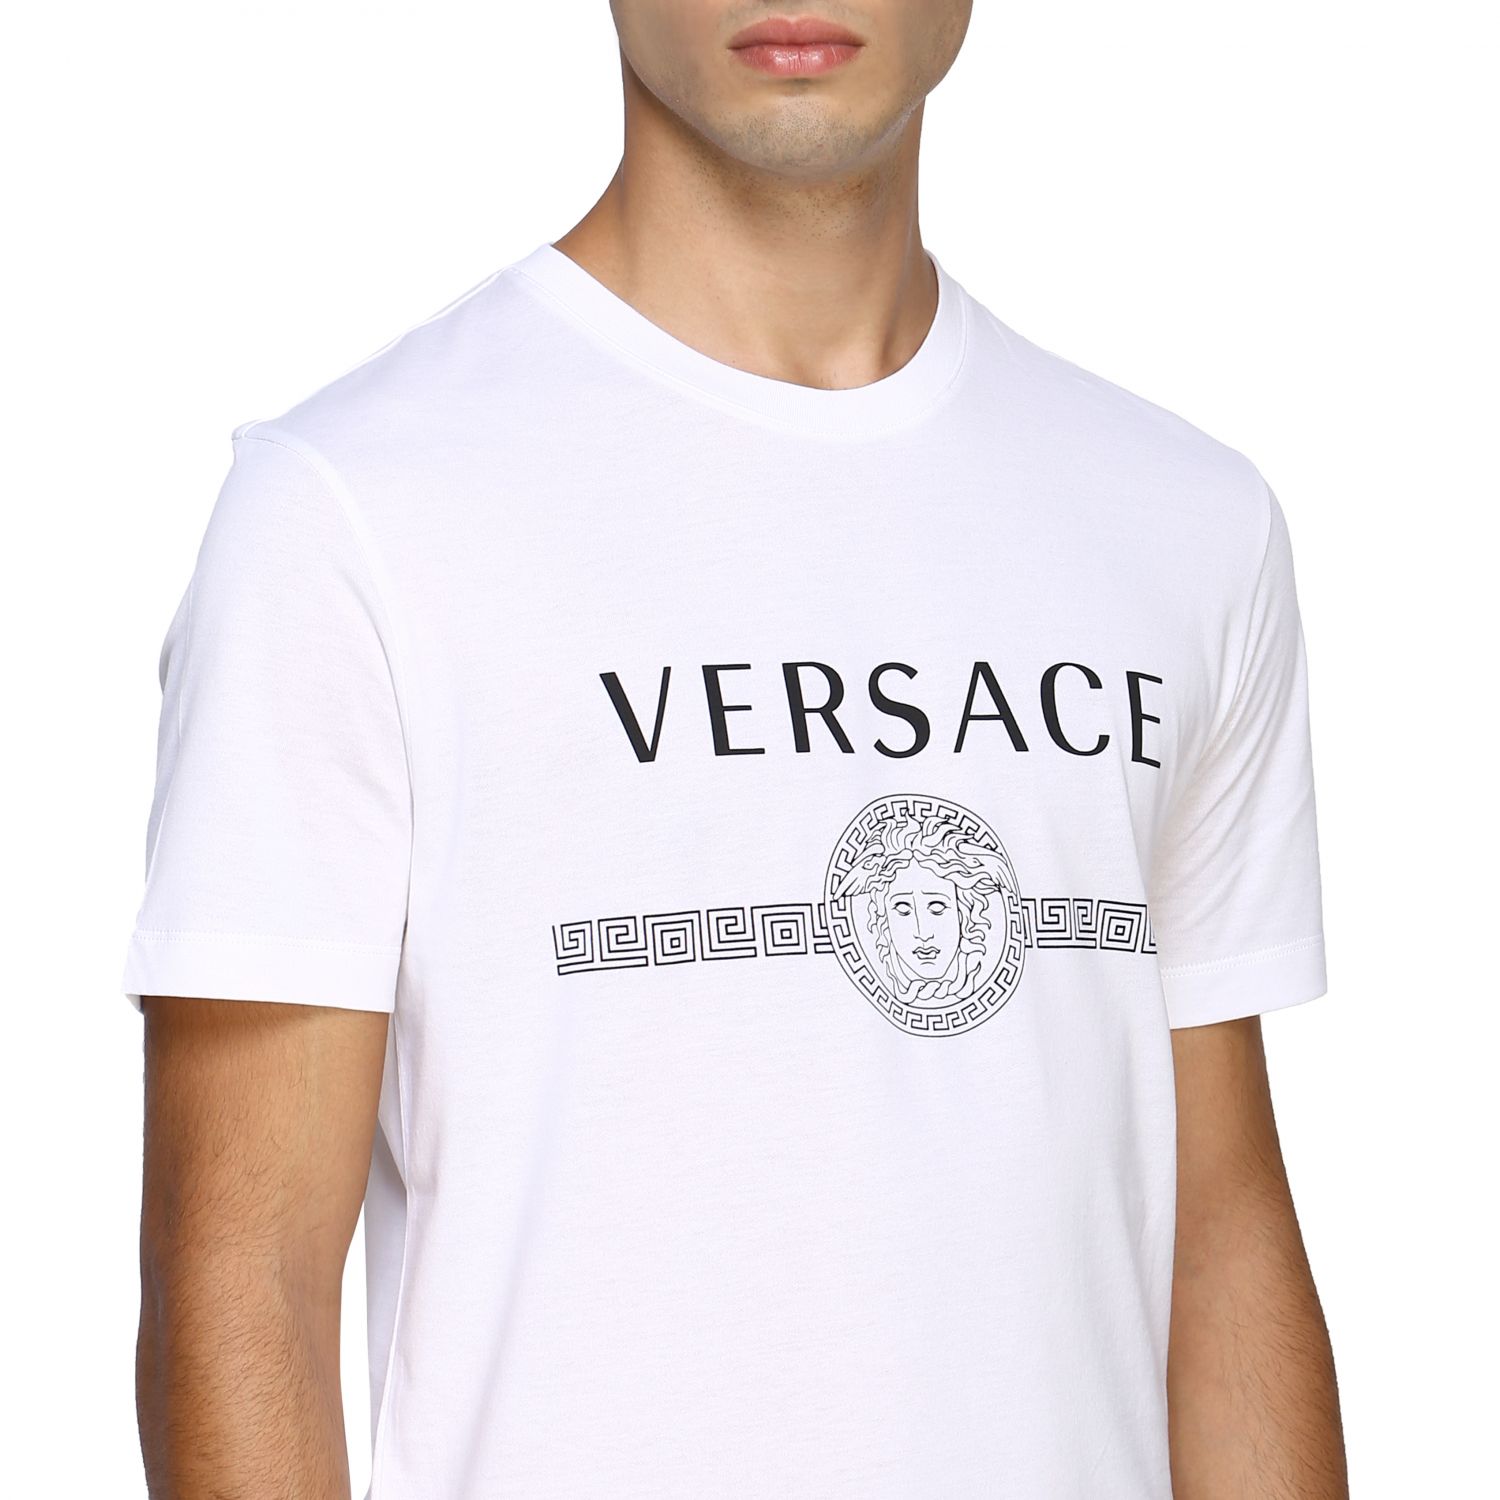 Versace Outlet: t-shirt for men - White | Versace t-shirt A83159 ...